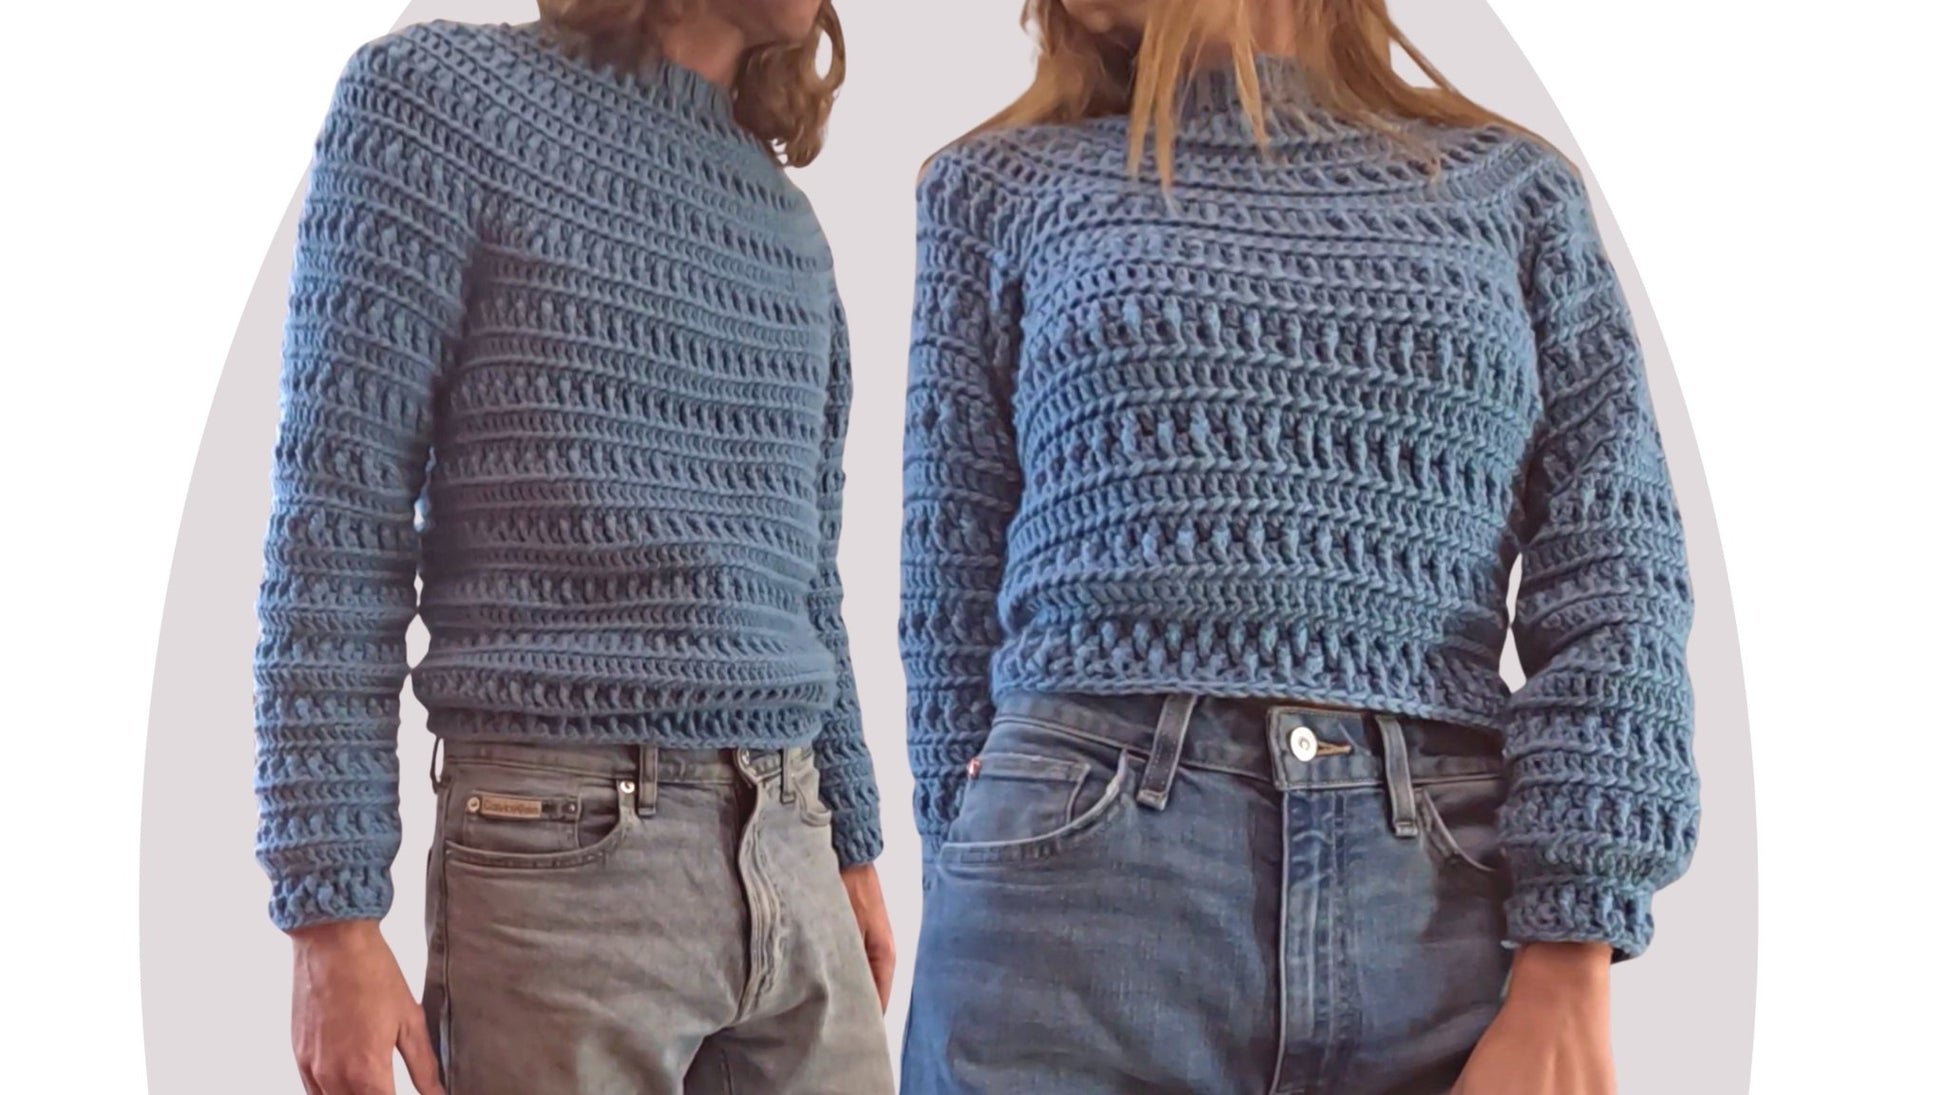 Crochet Pattern - Pine - Unisex Size Inclusive Sweater - Mermaidcat Designs